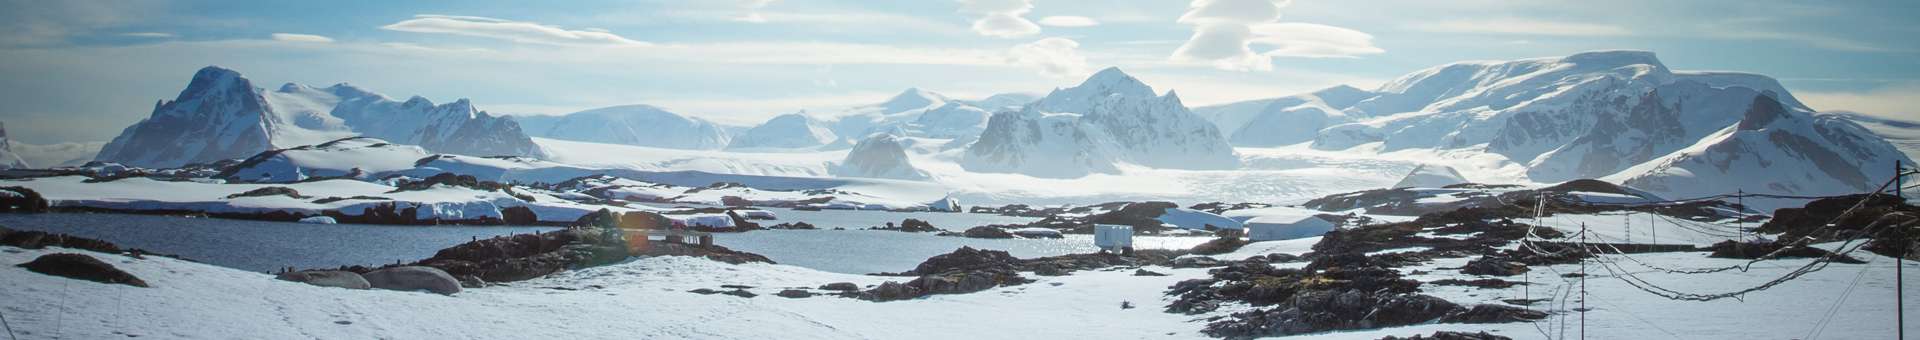 Búsqueda de información Whois de nombres de dominios  Antártica